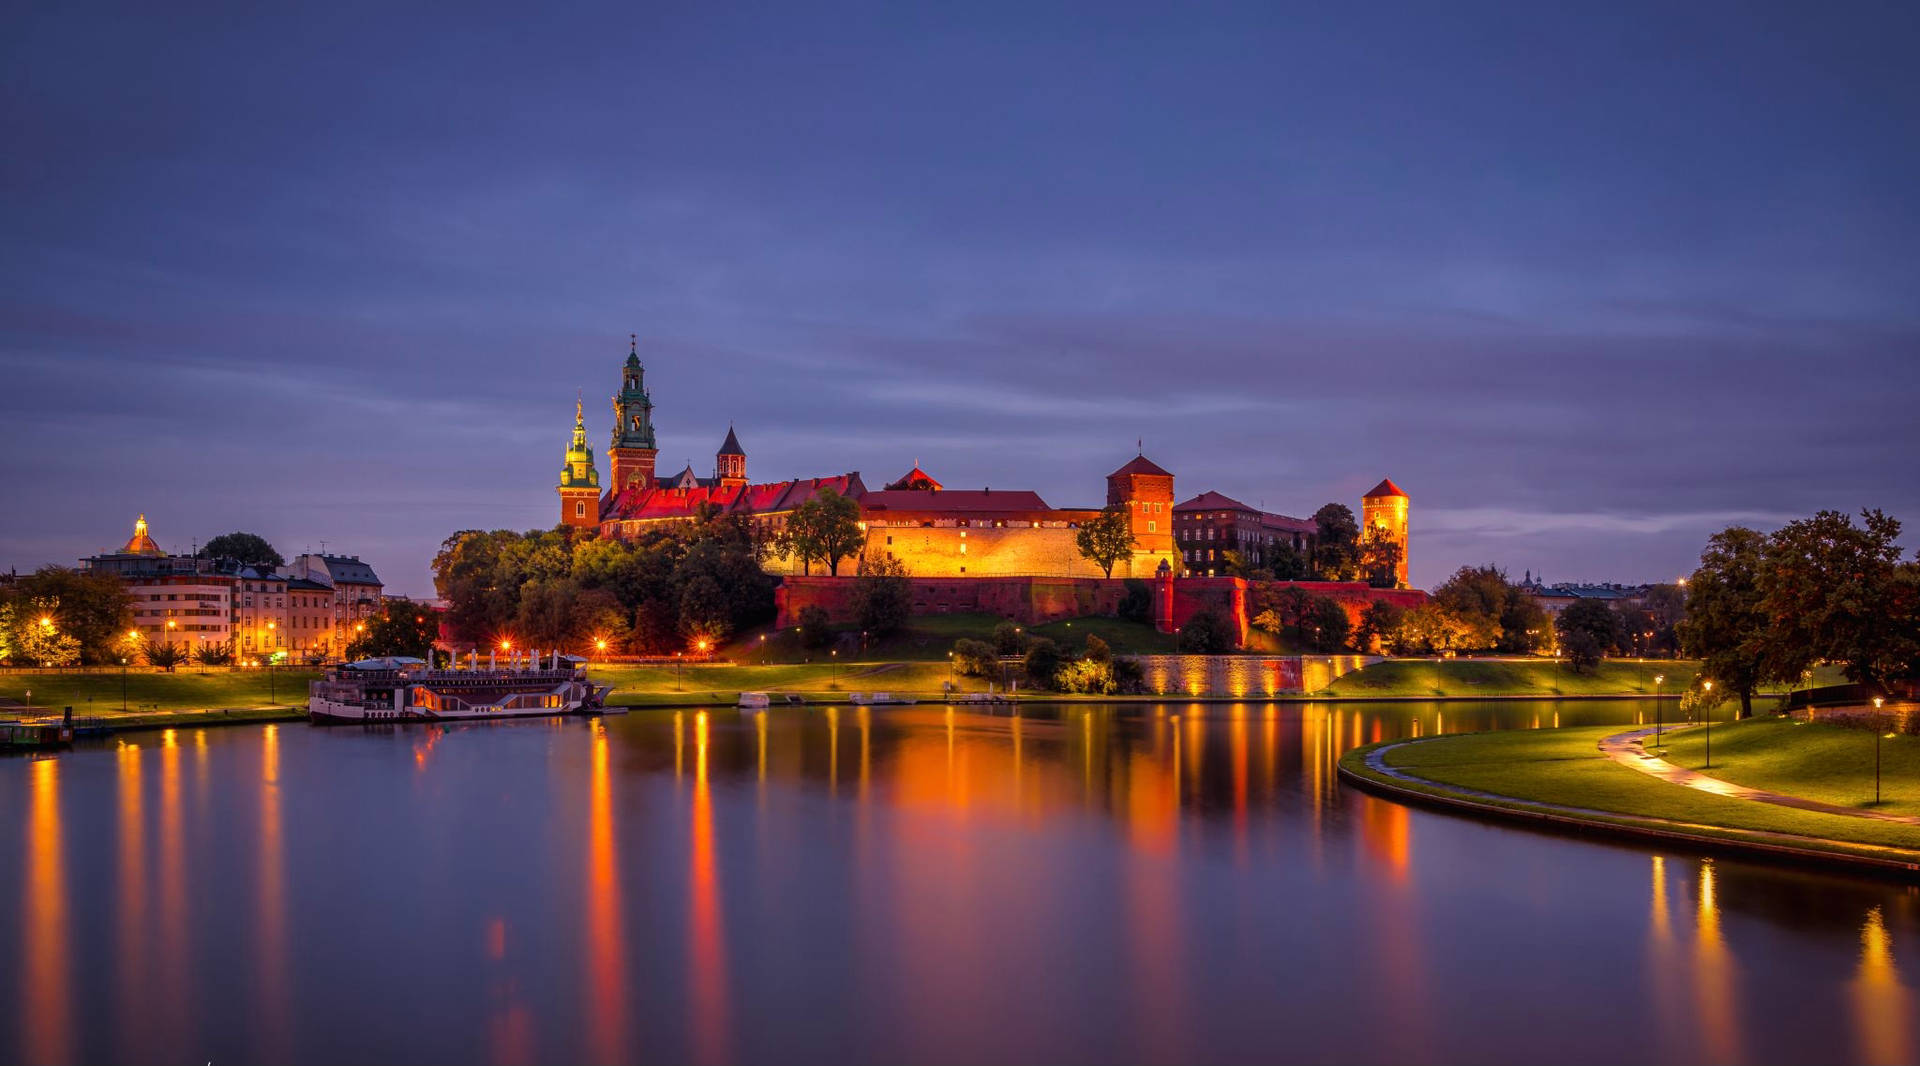 Majestic Night At Wawel Castle, Poland